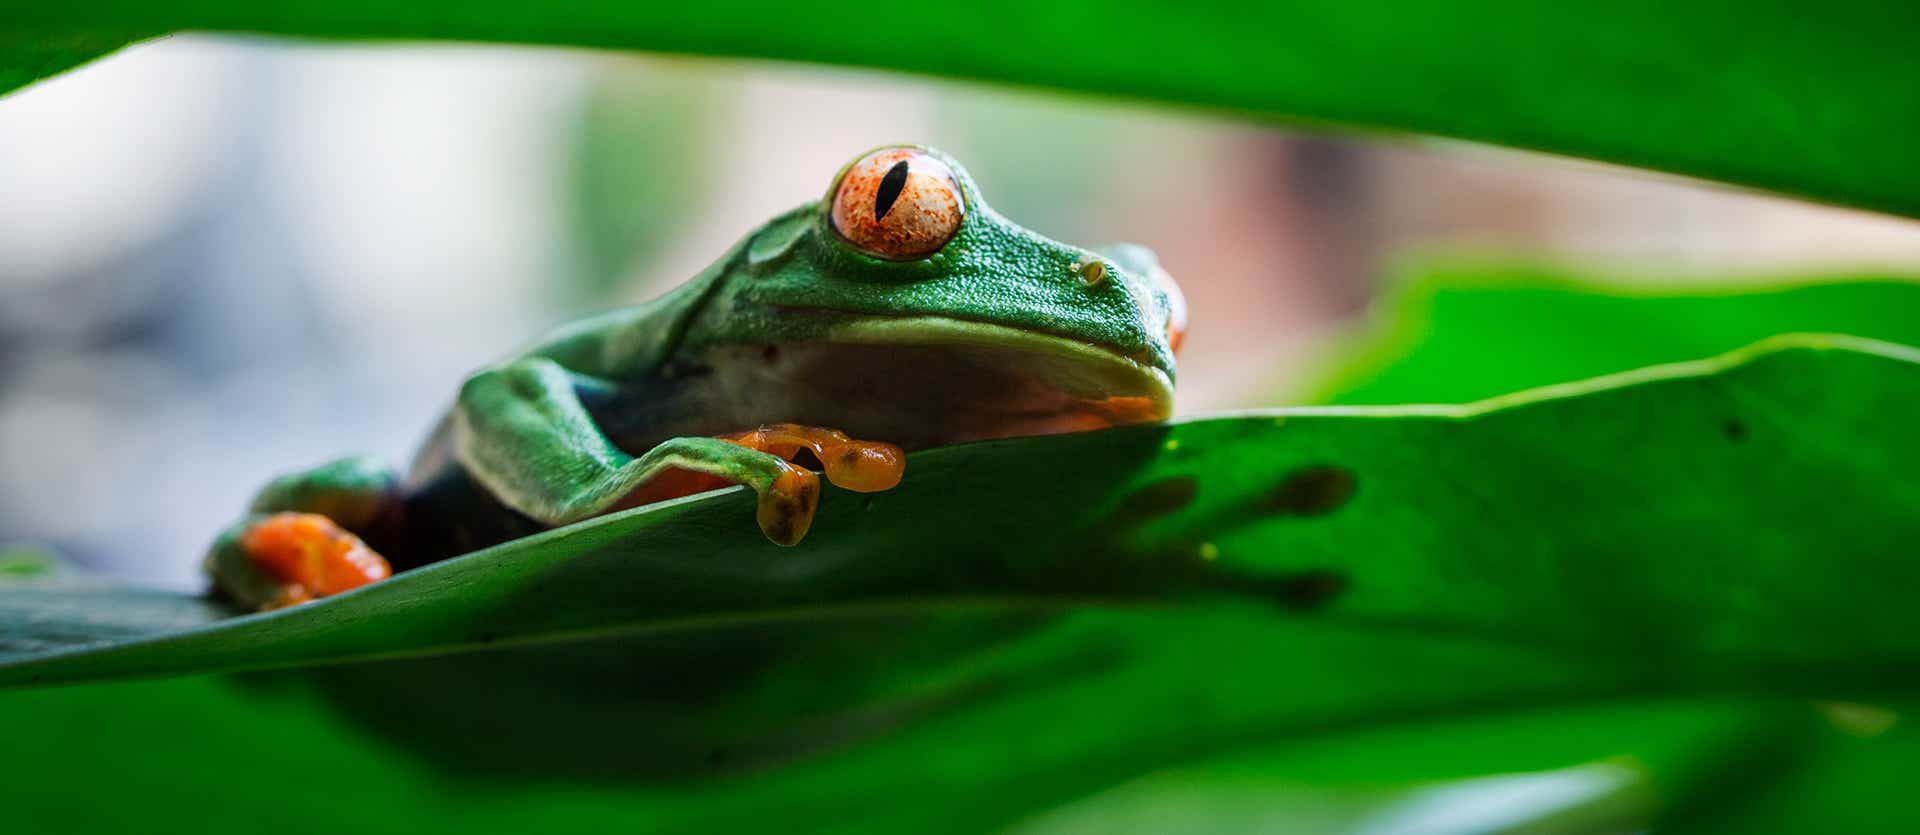 Tree Frog <span class="iconos separador"></span> Tortuguero <span class="iconos separador"></span> Costa Rica